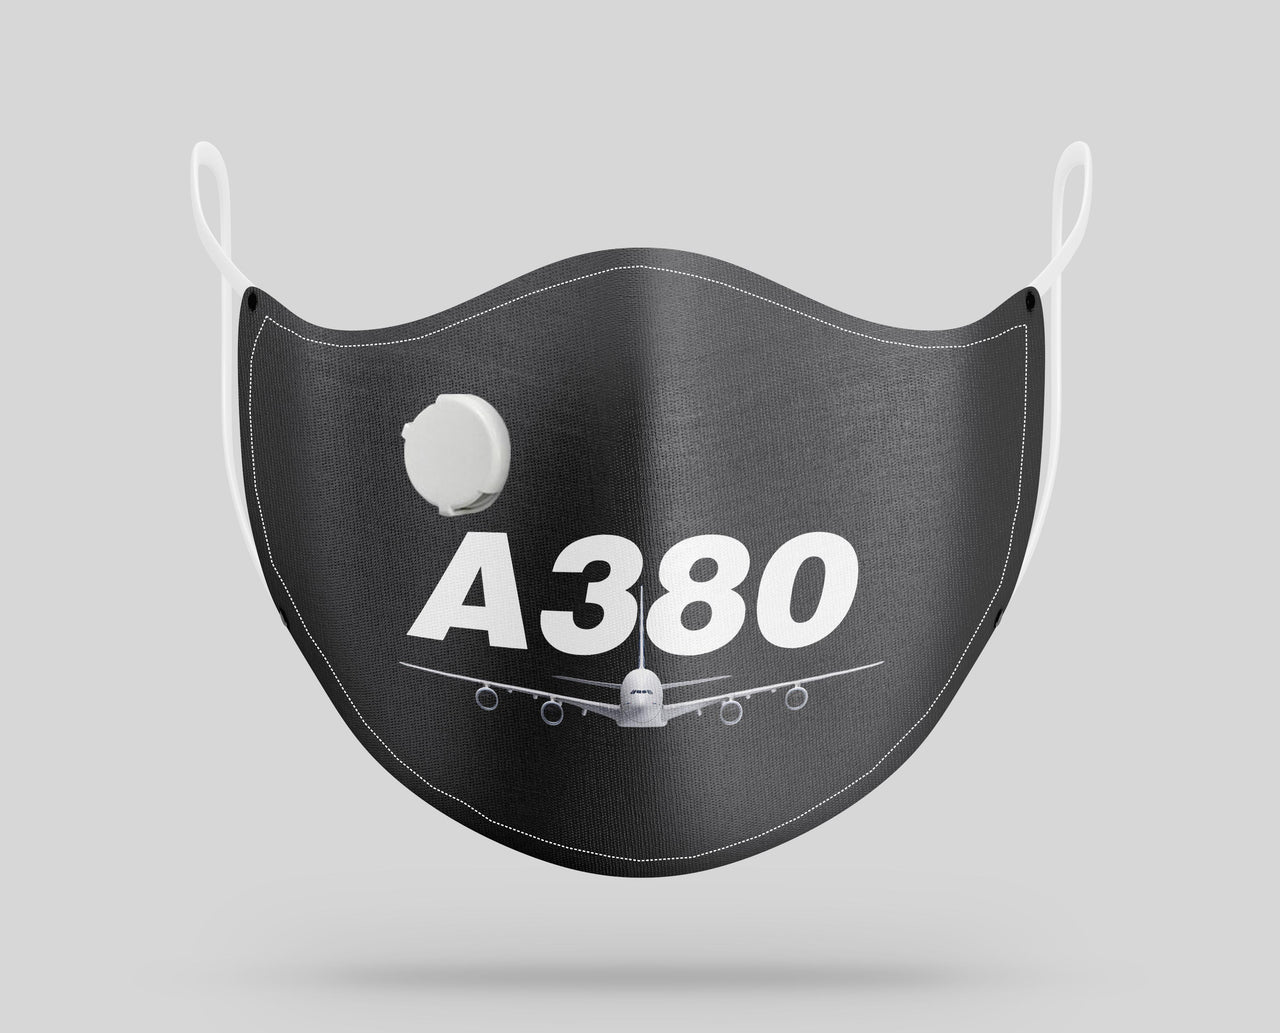 Super Airbus A380 Designed Face Masks